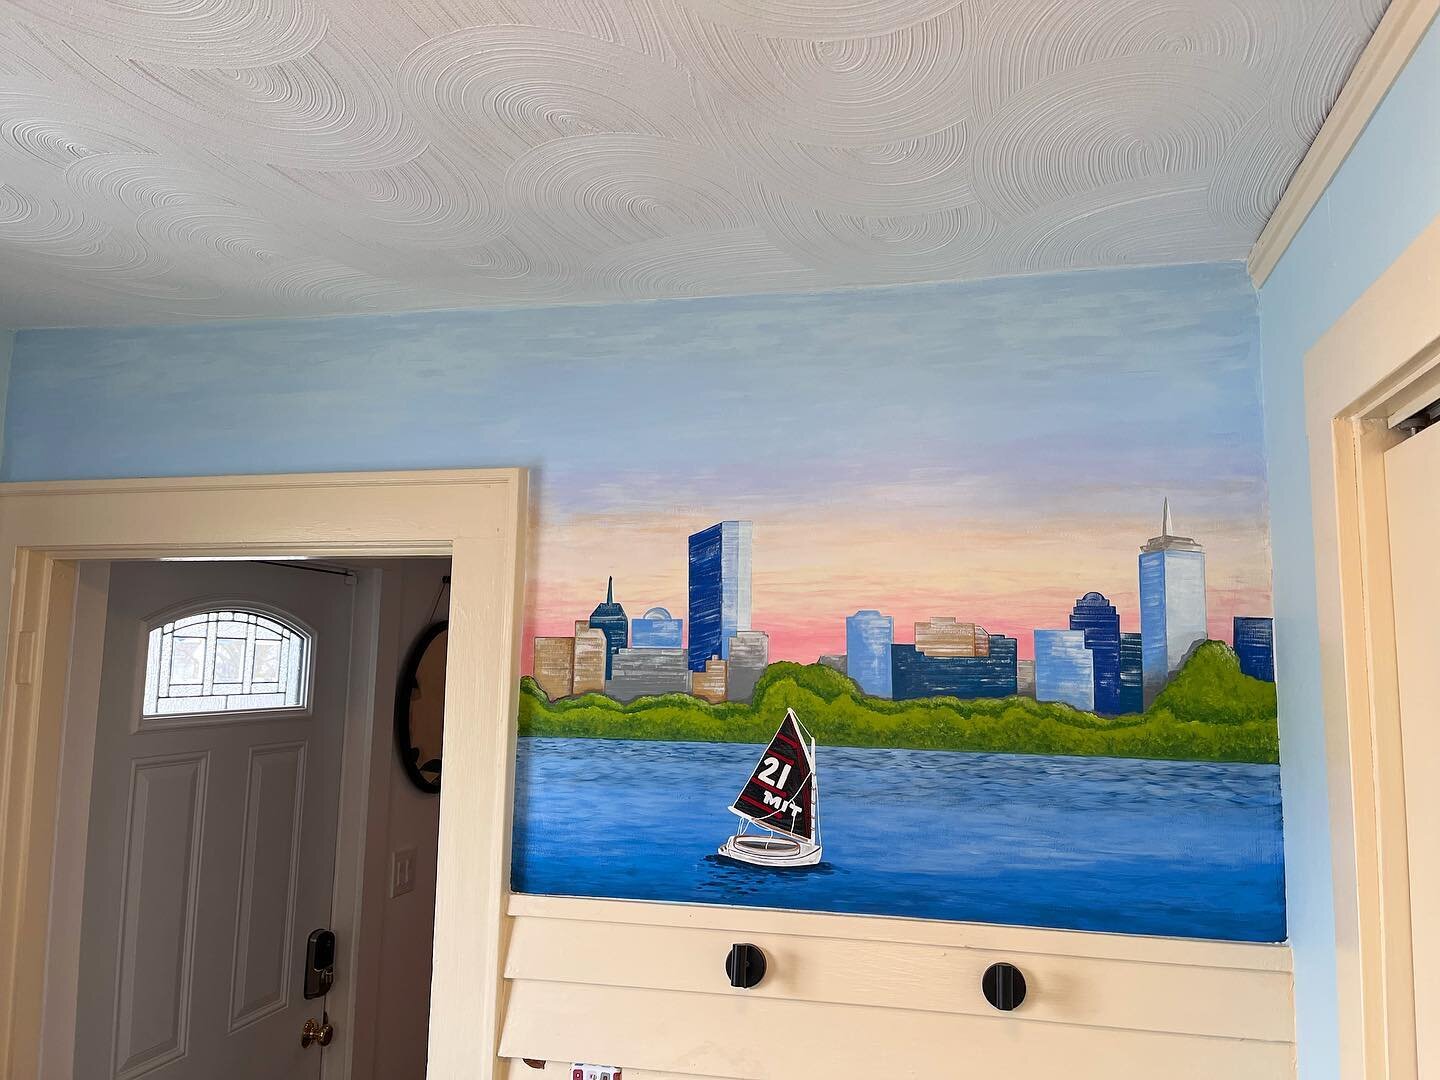 Home office mural for @j0hnbr0dy 🏙 
.
.
.
#boston #bostonskyline #painting #mural #bostonmuralist #homeoffice #art #bostonartist #artistsoninstagram #fyp #foryou #explorepage